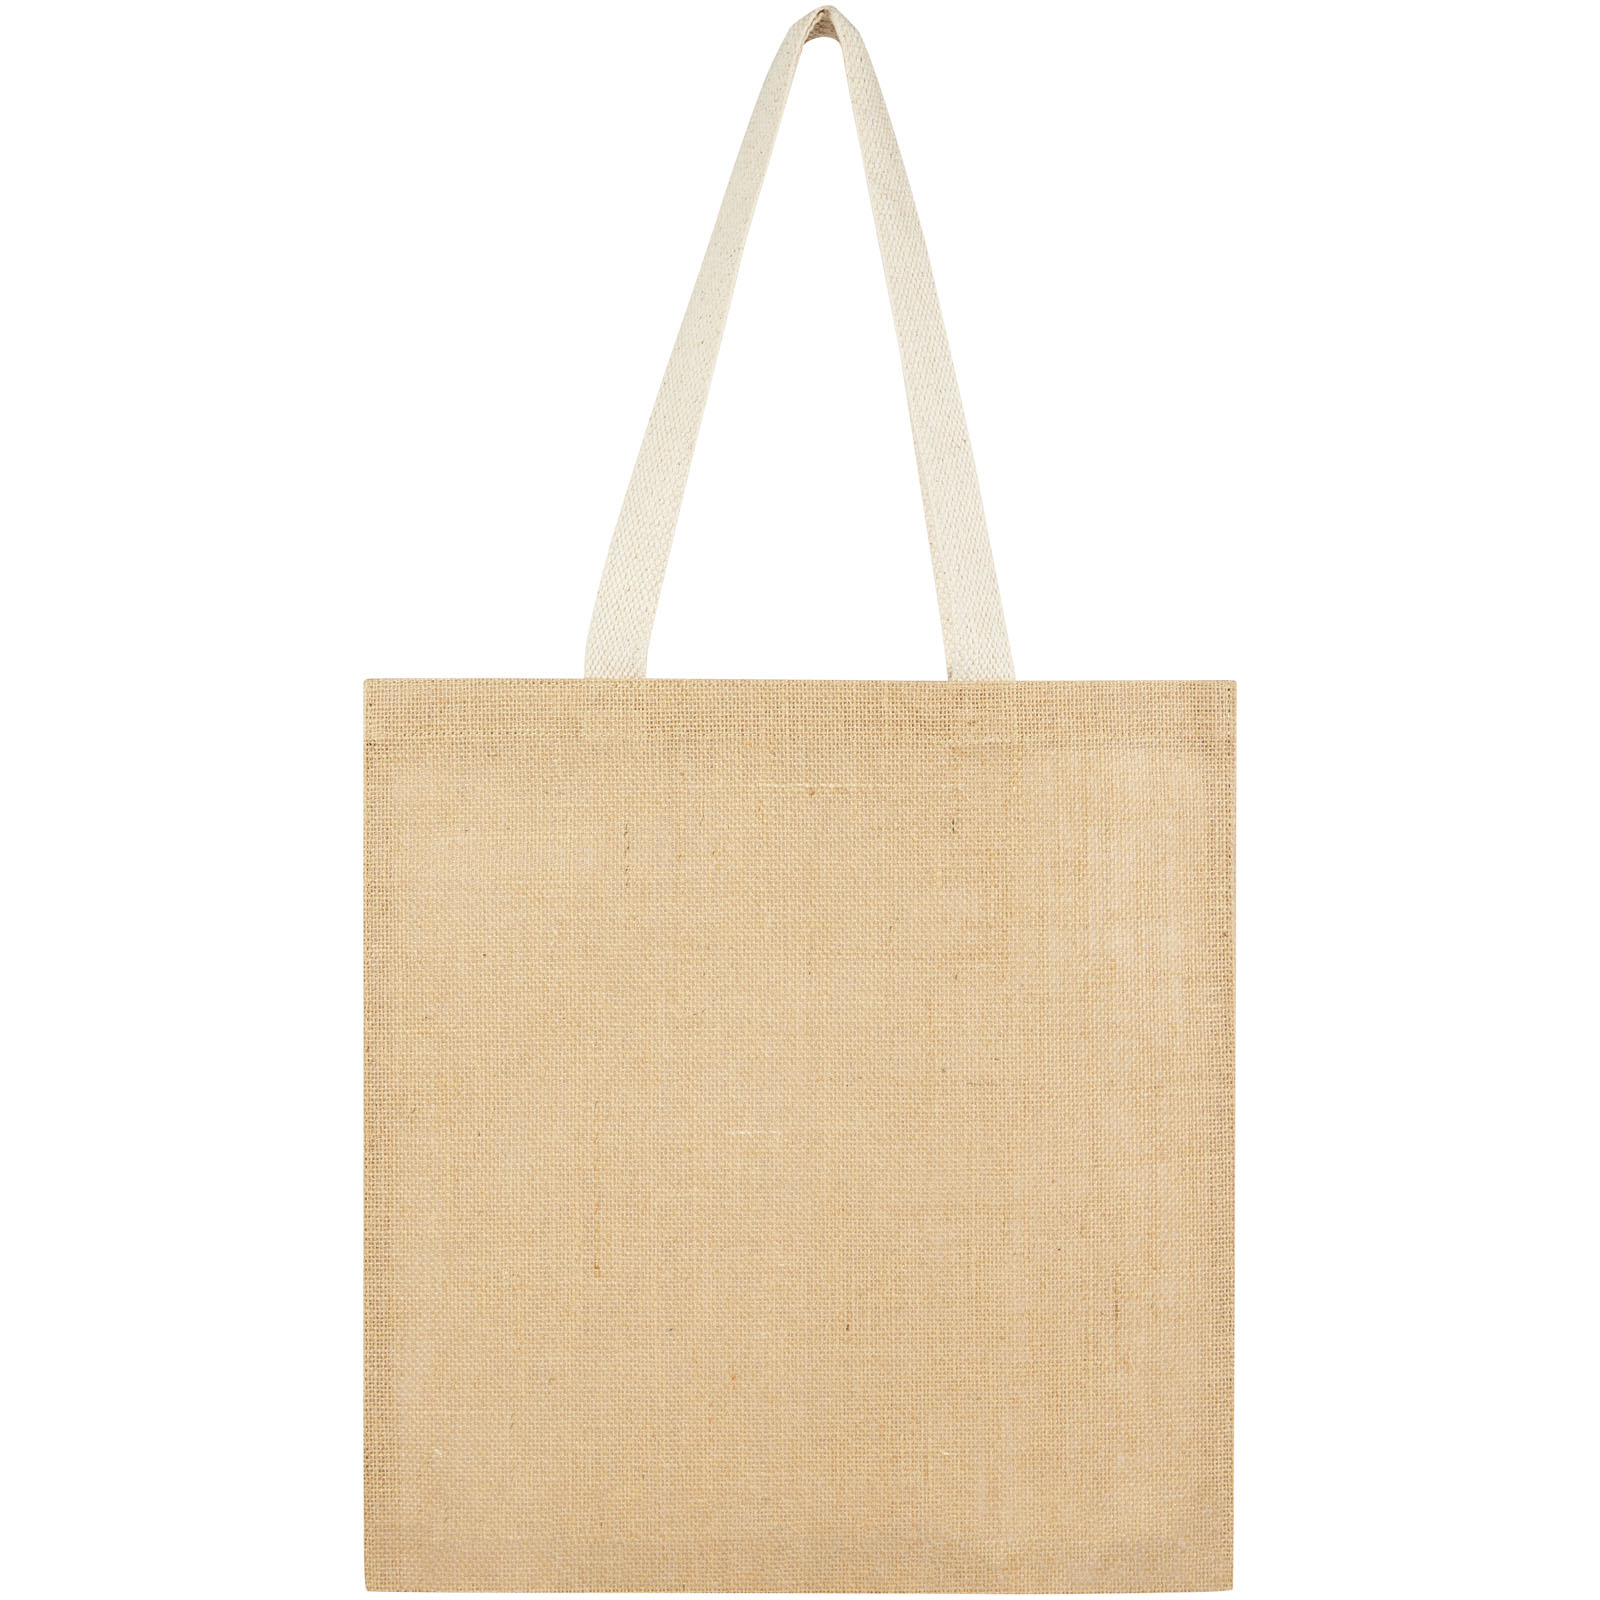 Advertising Shopping & Tote Bags - Juta 300 g/m² jute tote bag 7L - 1